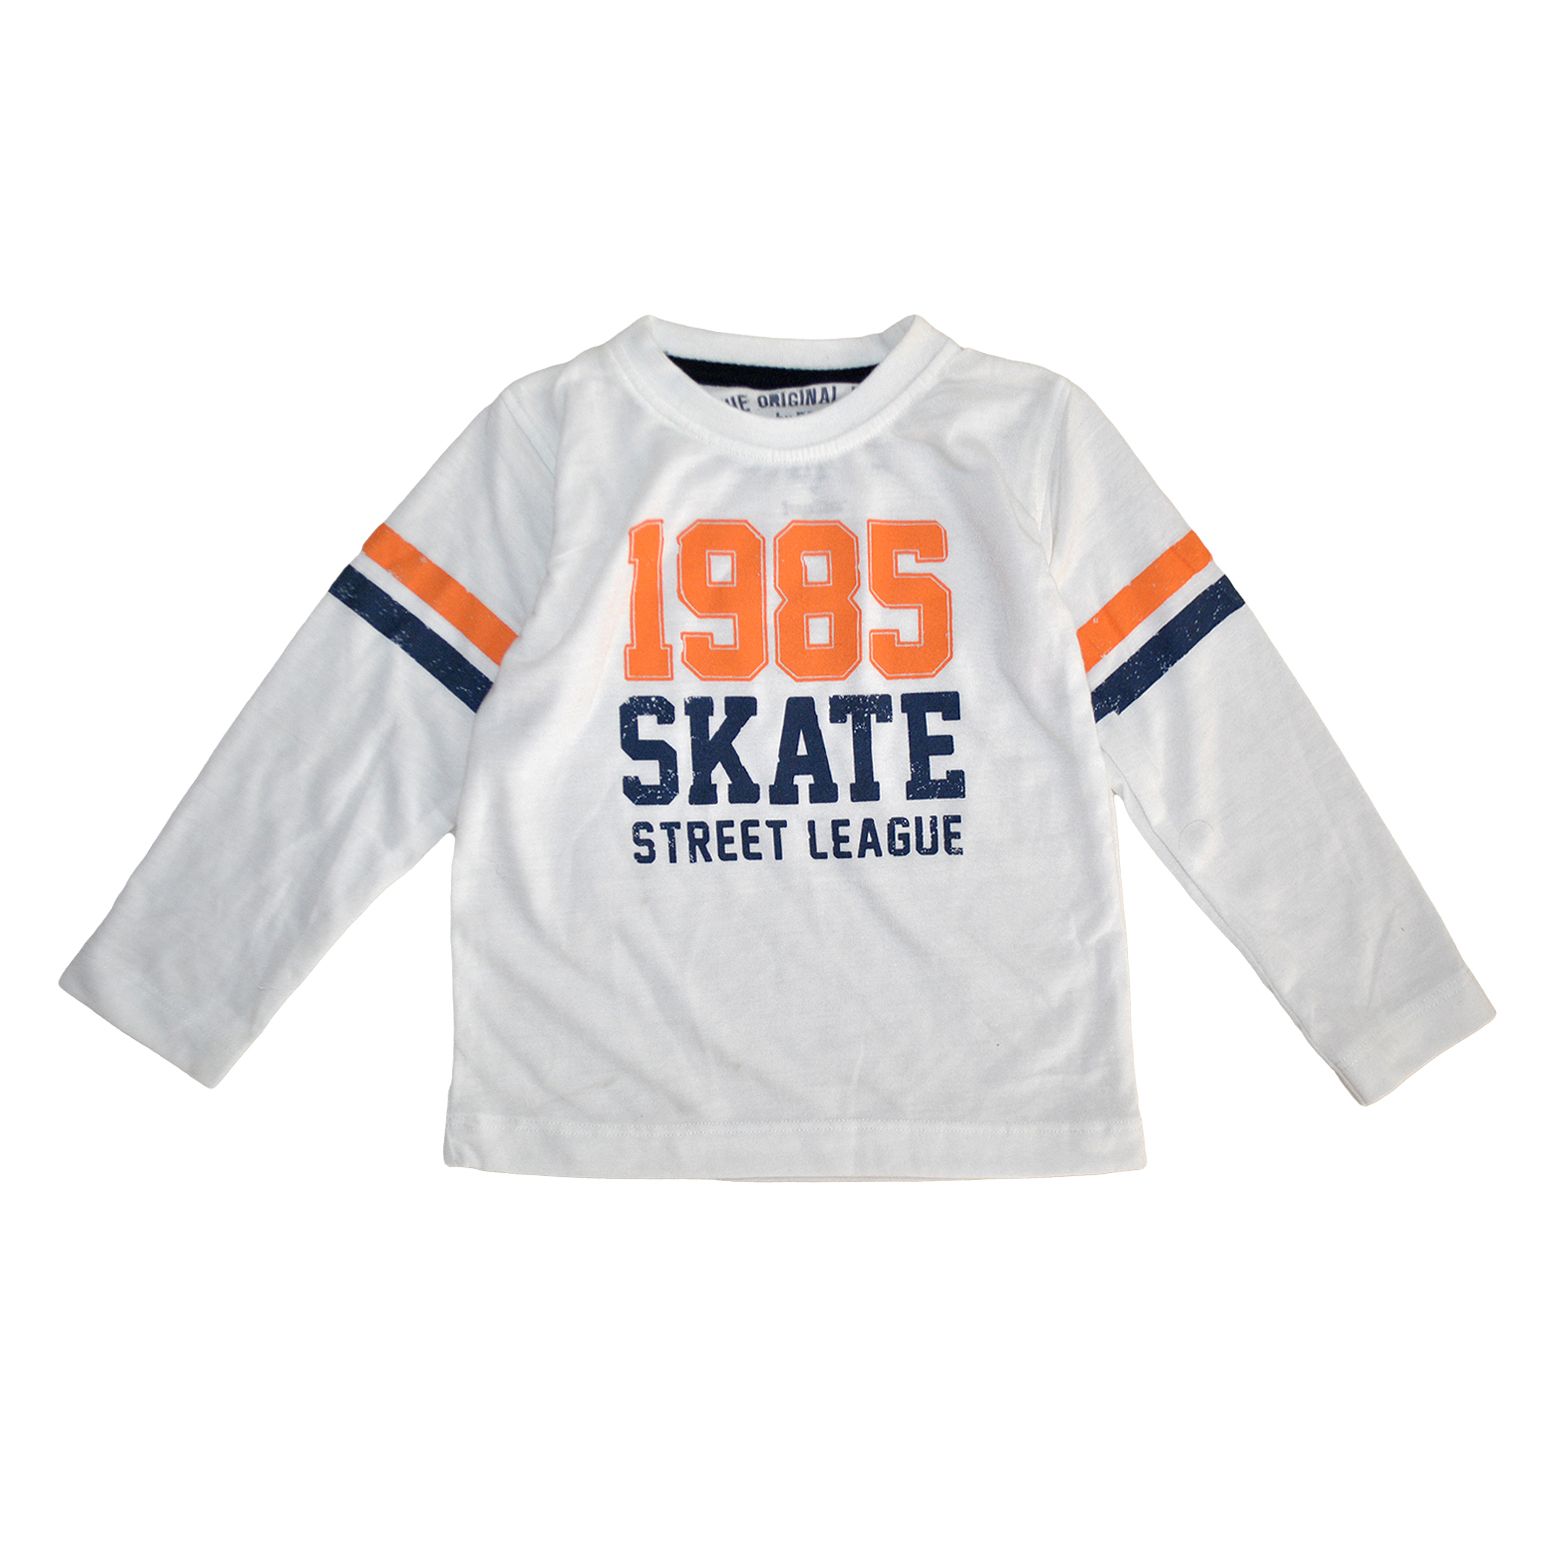 تی شرت آستین بلند پسرانه لوپیلو مدل 1989 skate